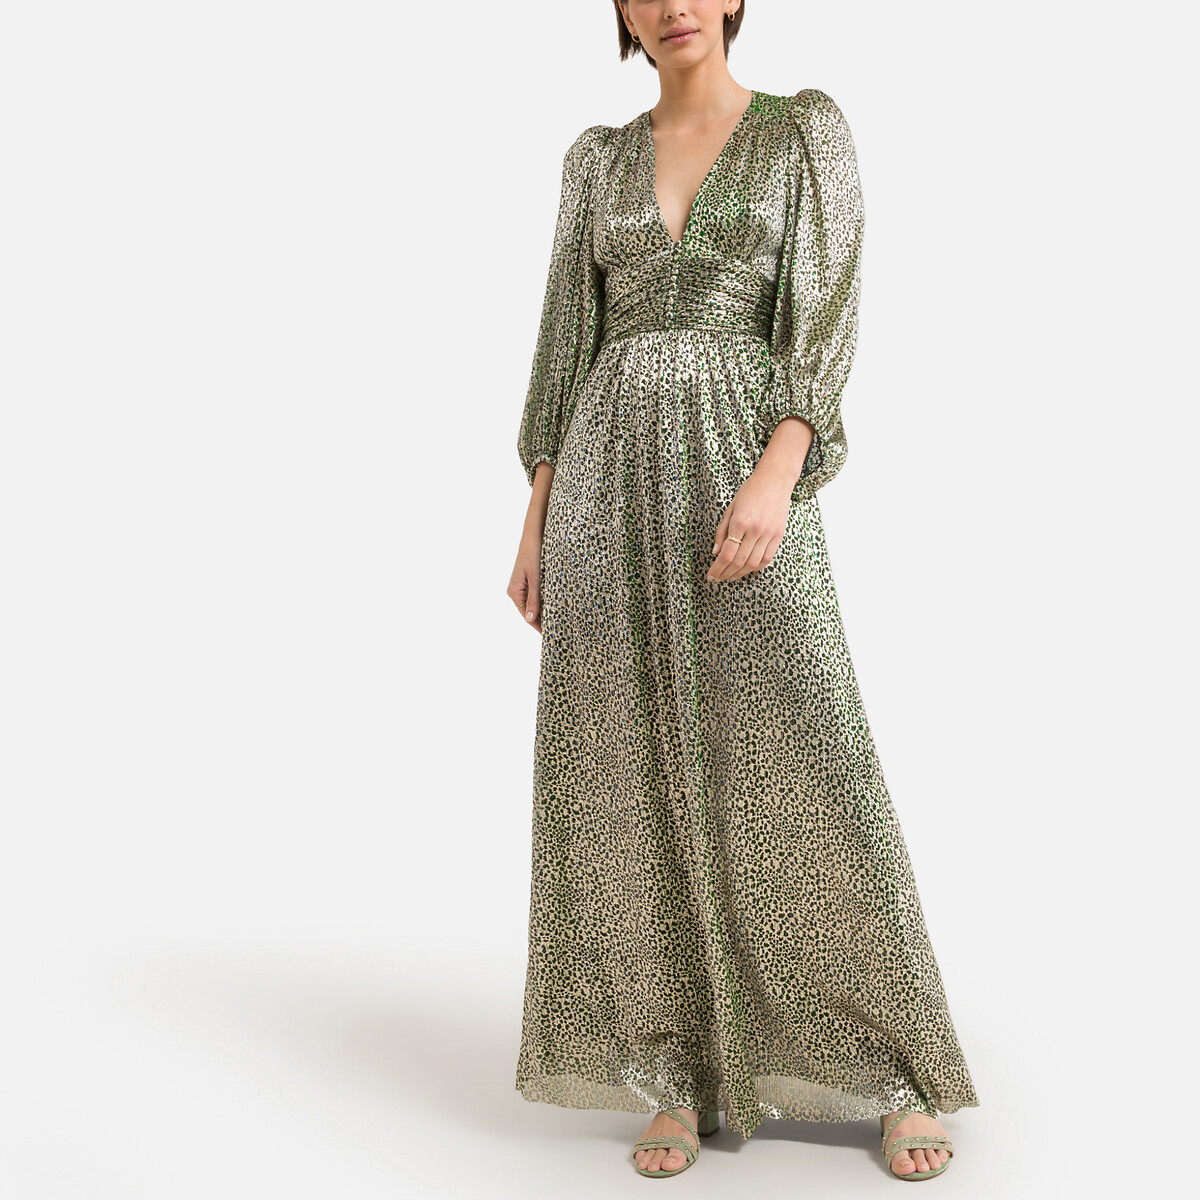 Robe Longue Imprimee Celie Vert Ba Sh La Redoute